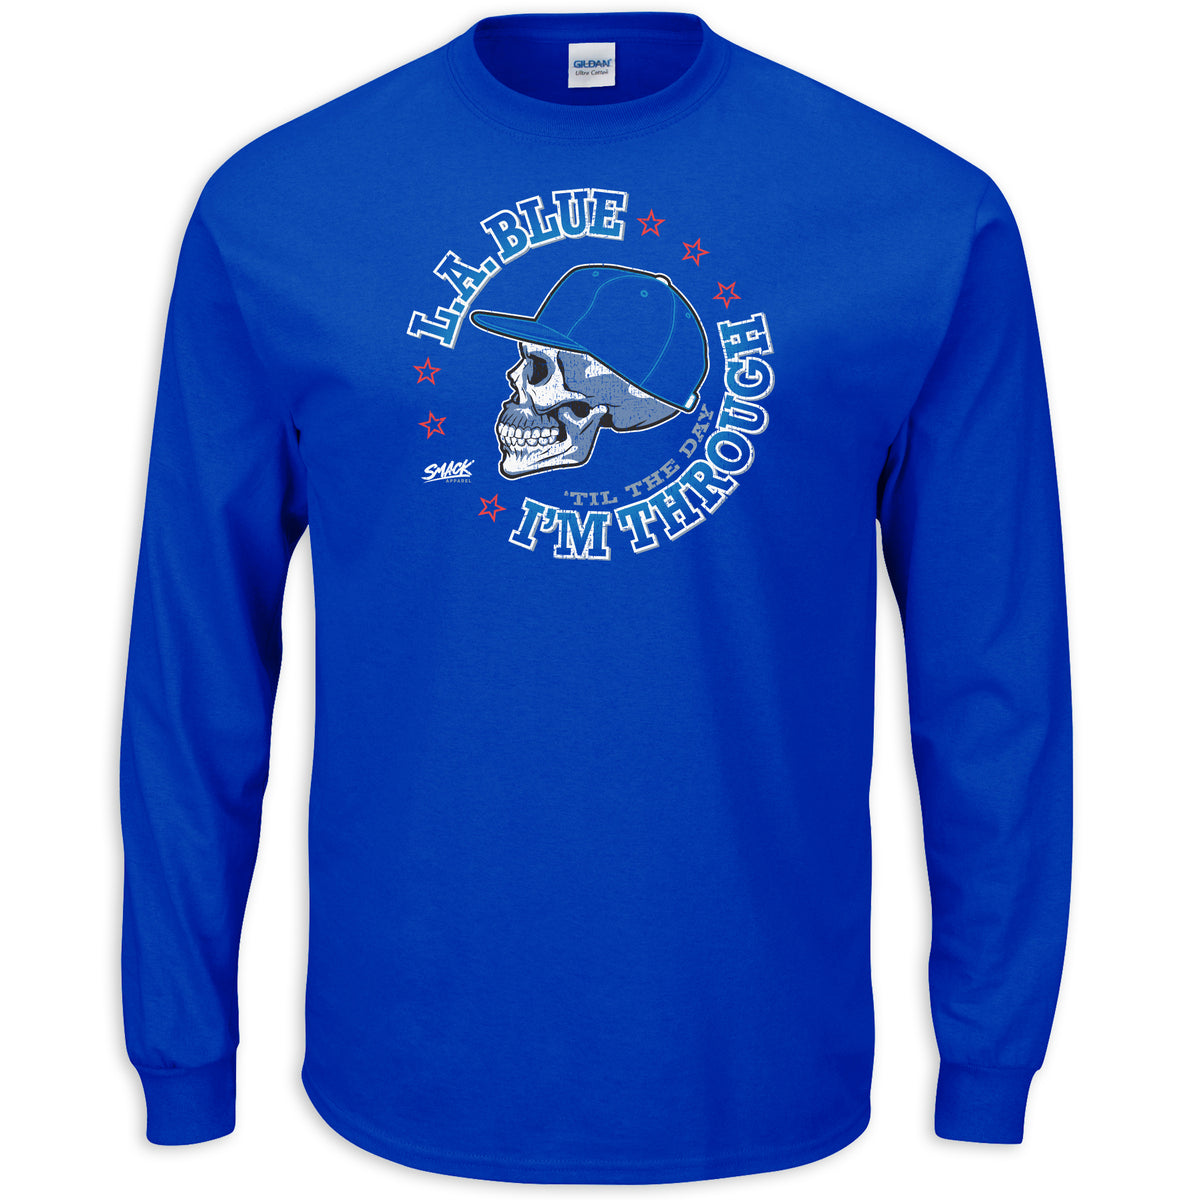 Bright Blue La Slogan Sweat Baseball T Shirt Dress